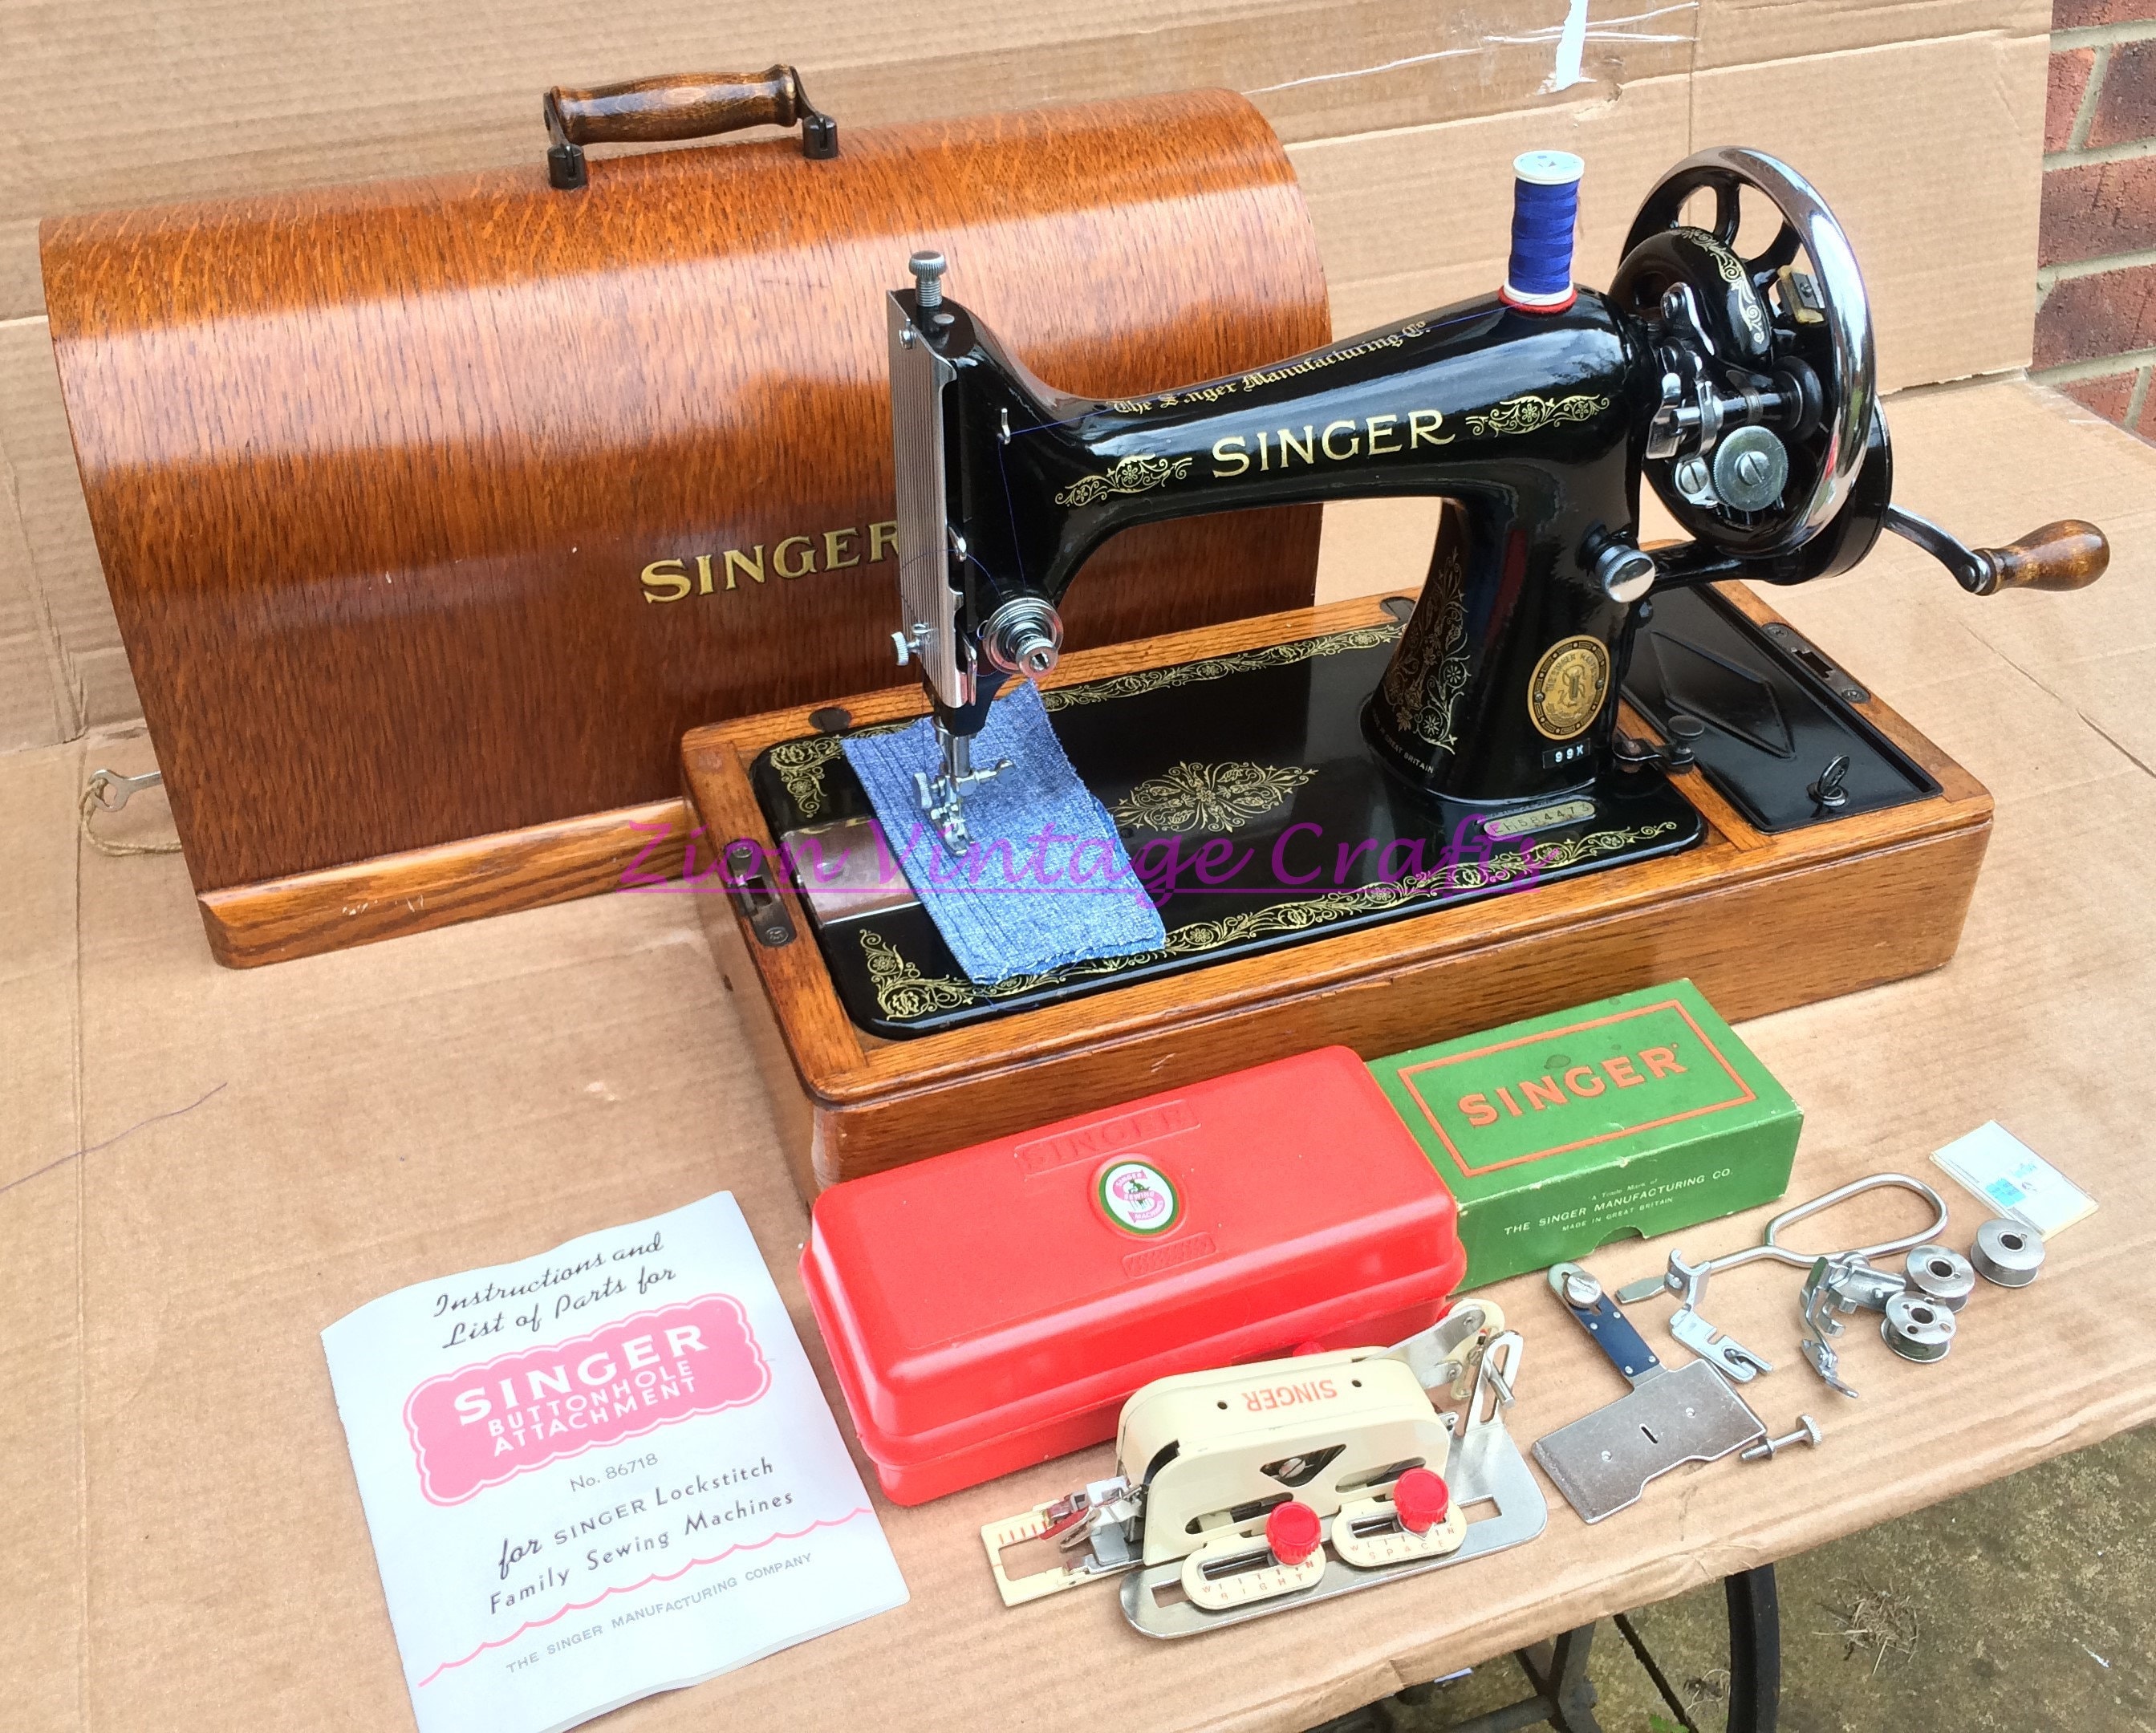 Singer Sewing Machine Belts 